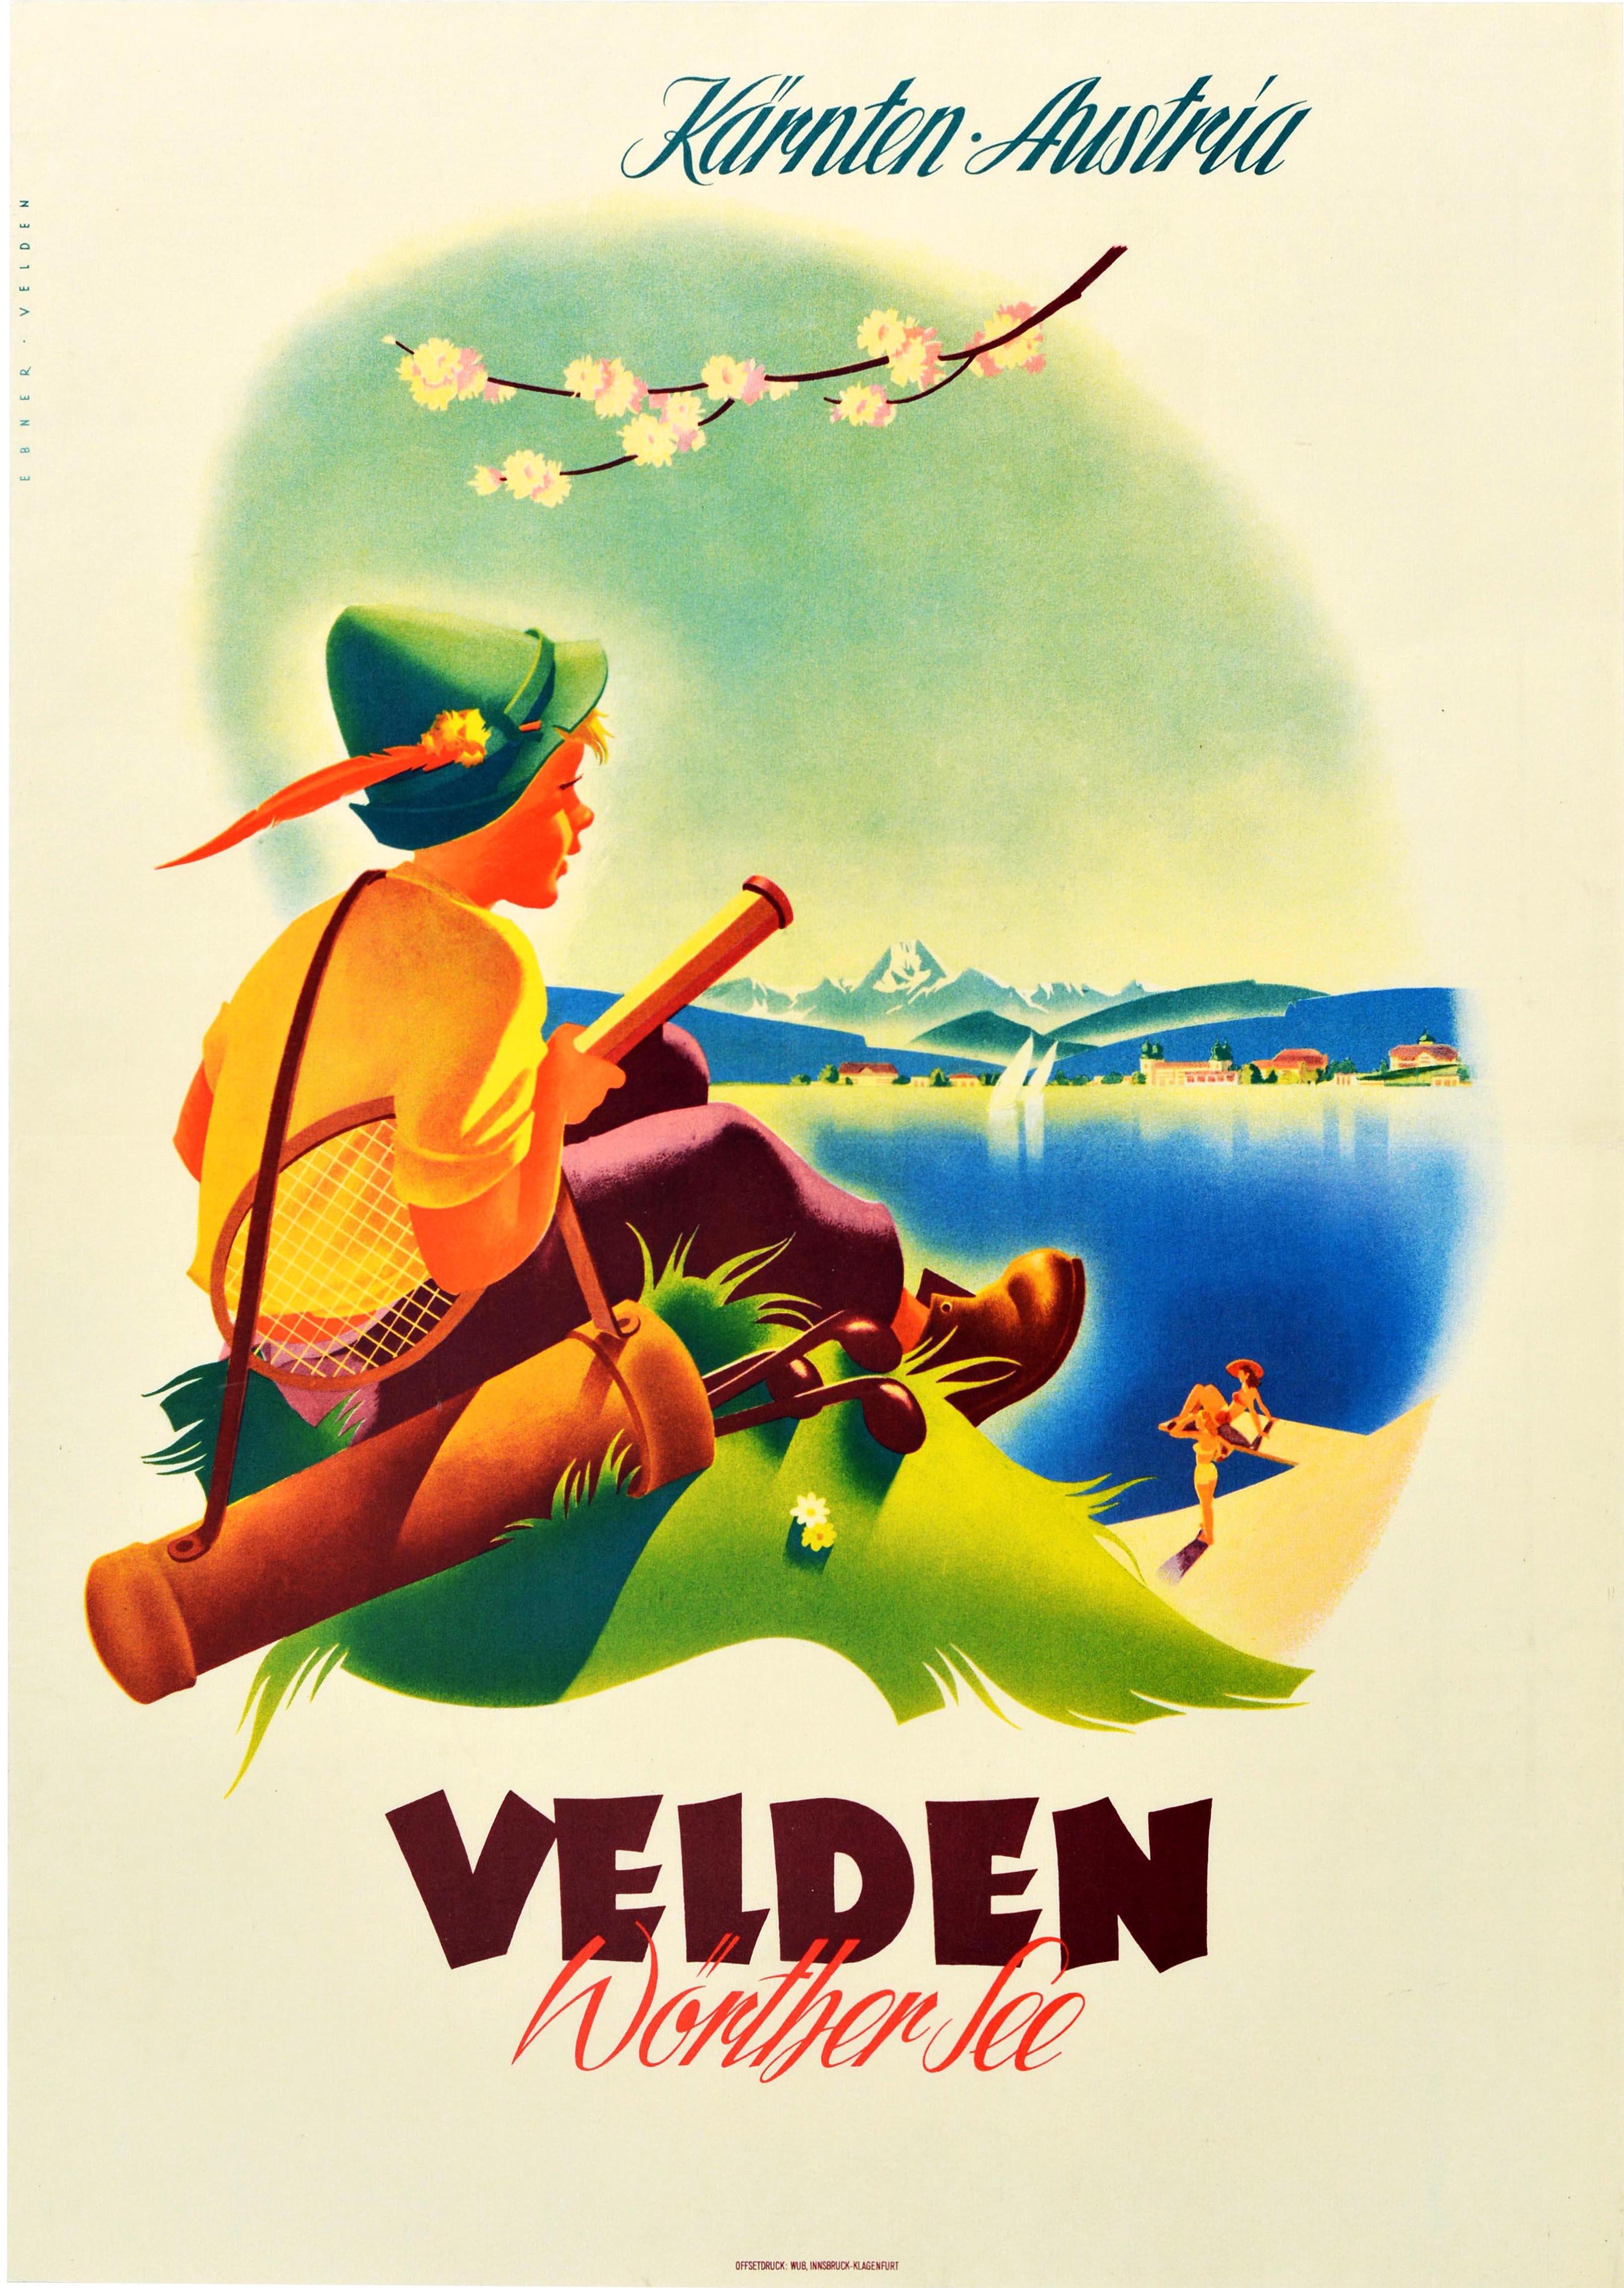 A Ebner Print - Original Vintage Poster Velden Worther See Lake Sailing Golf Tennis Mountains